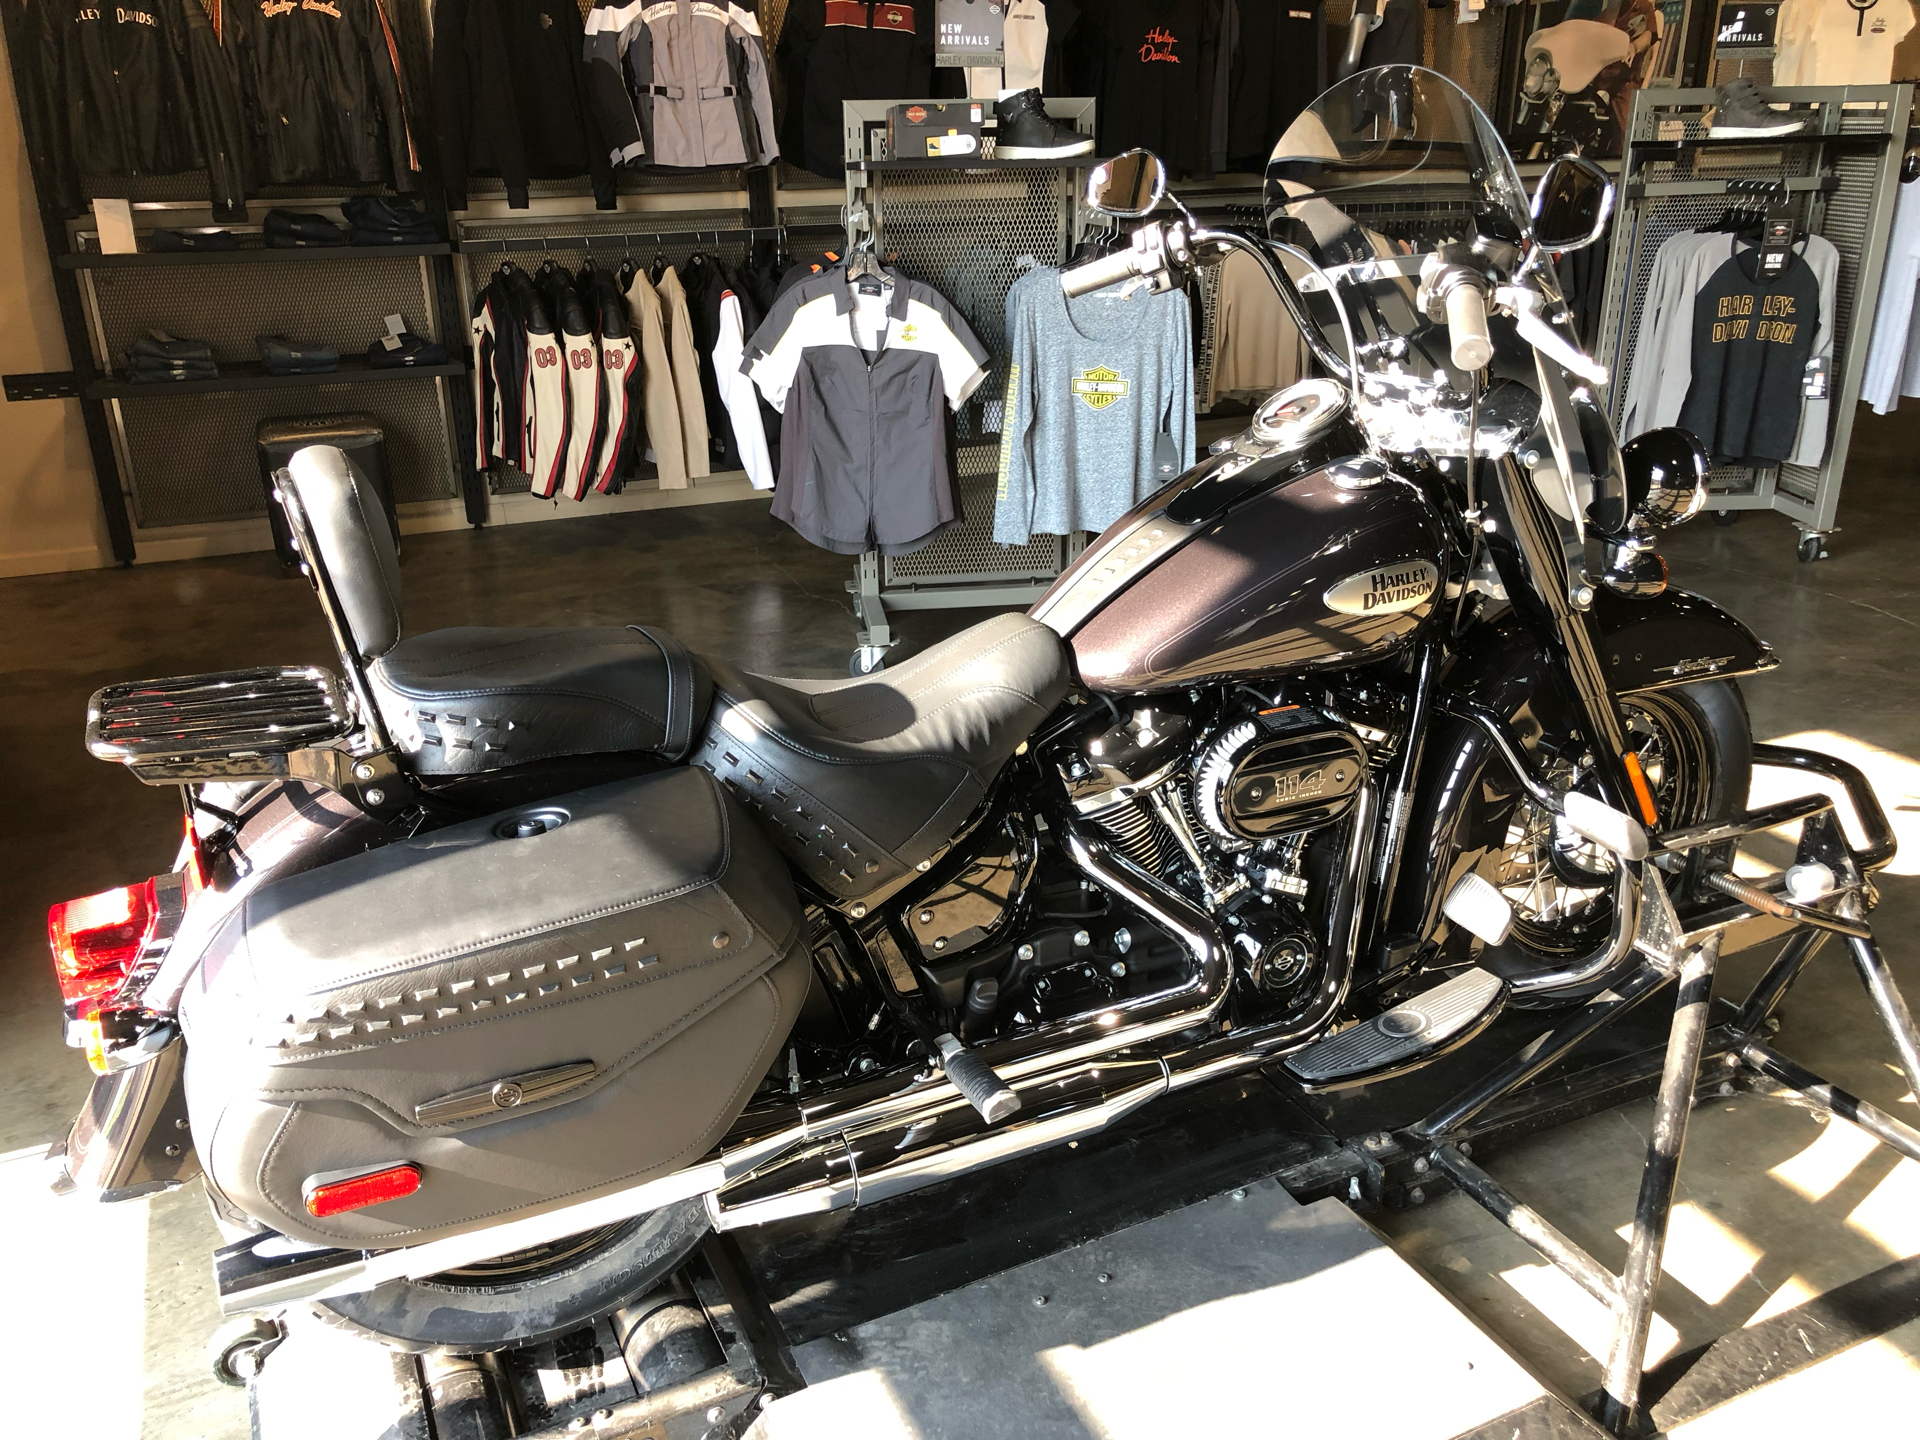 New 2021 Harley Davidson Heritage Classic 114 Black Jack Metallic Motorcycles In Jonesboro Ar 0553373ve1